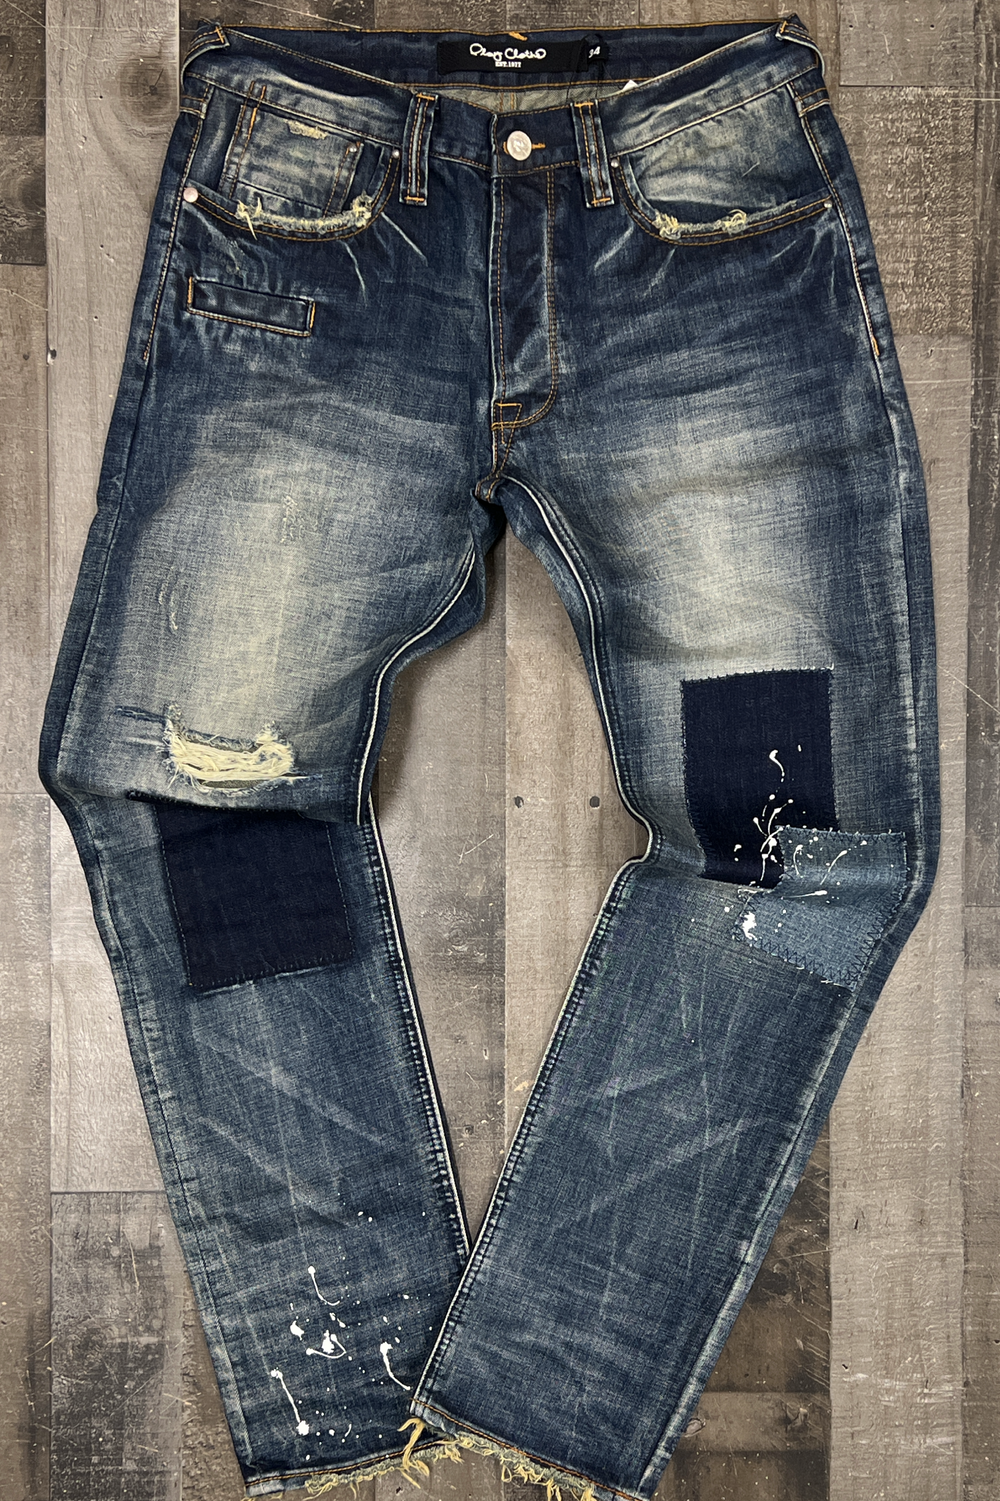 Play cloths- slim six jeans